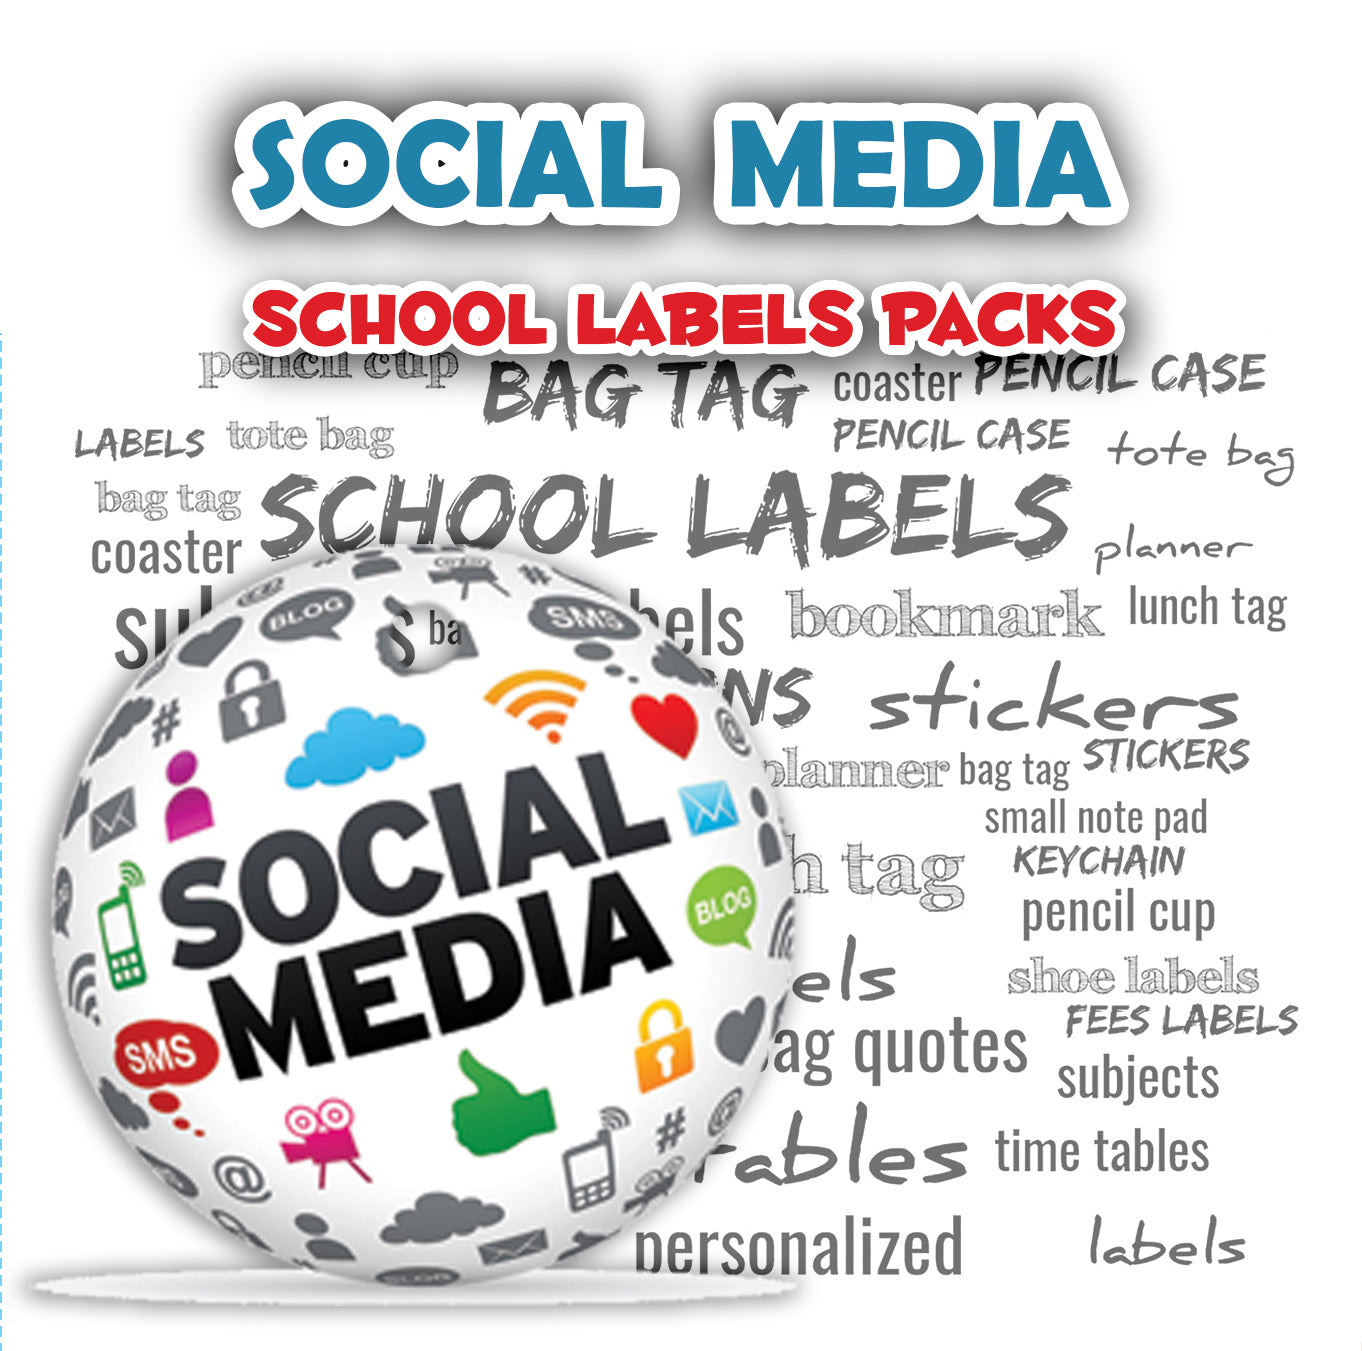 ""Social Media" School labels packs